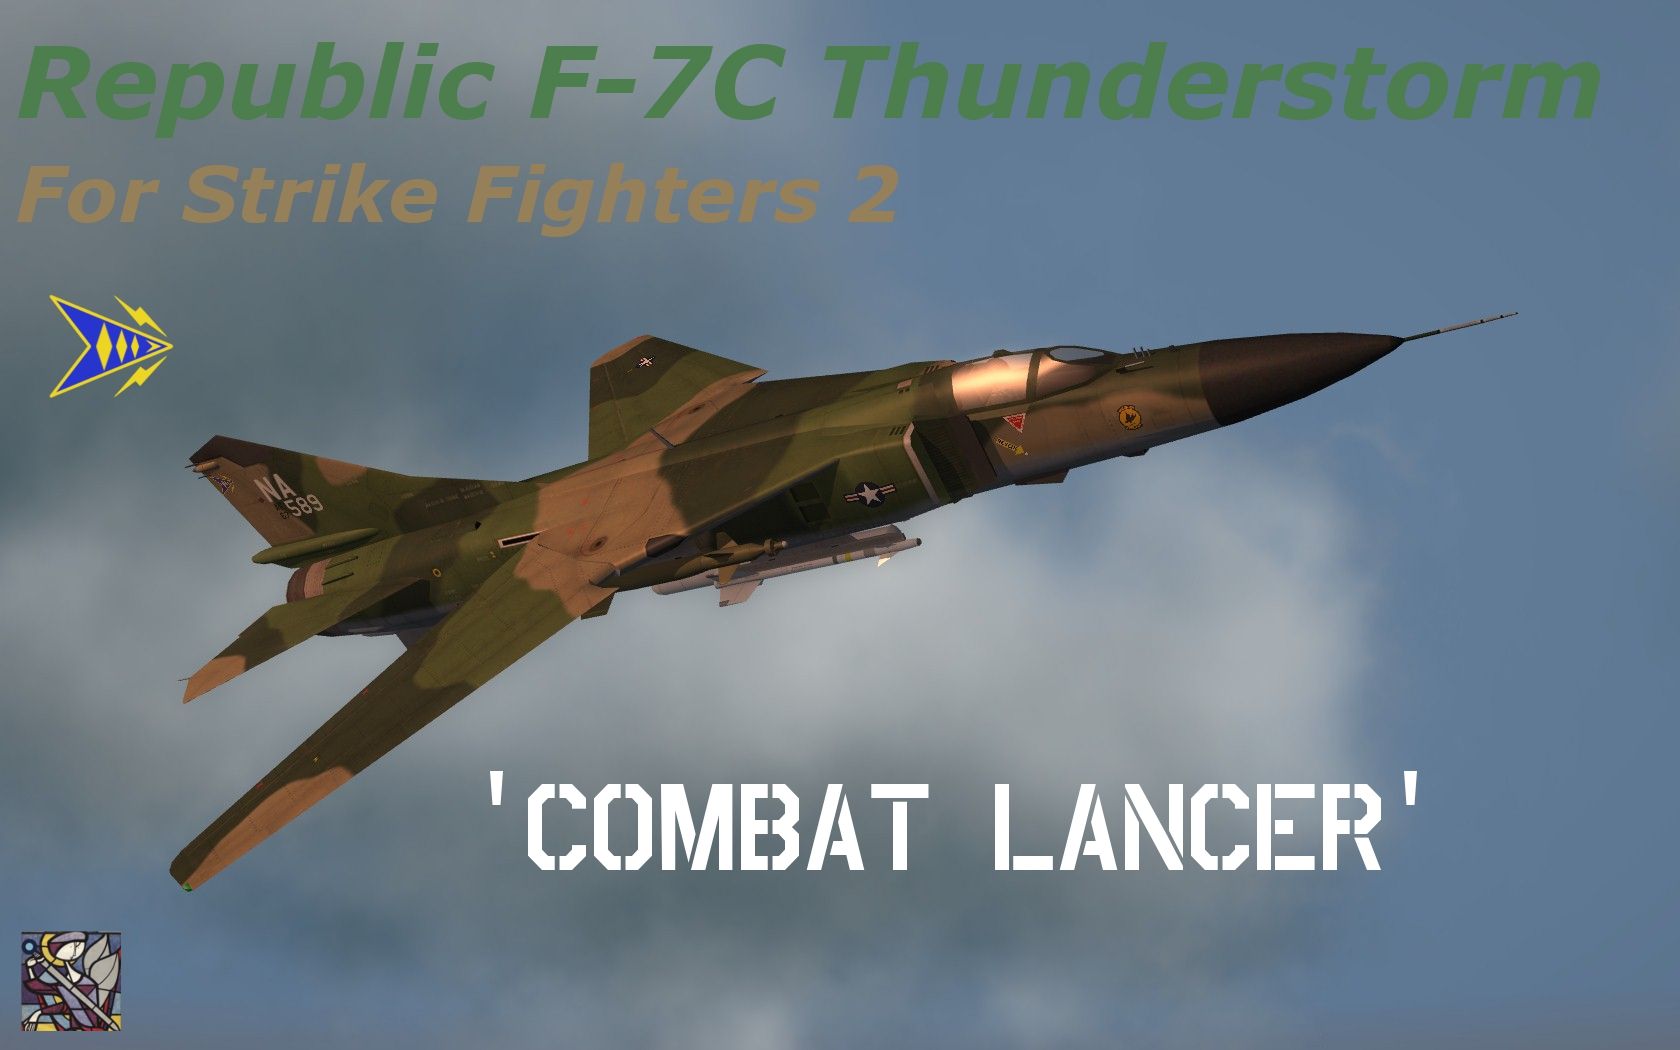 USAFF-7C10.jpg